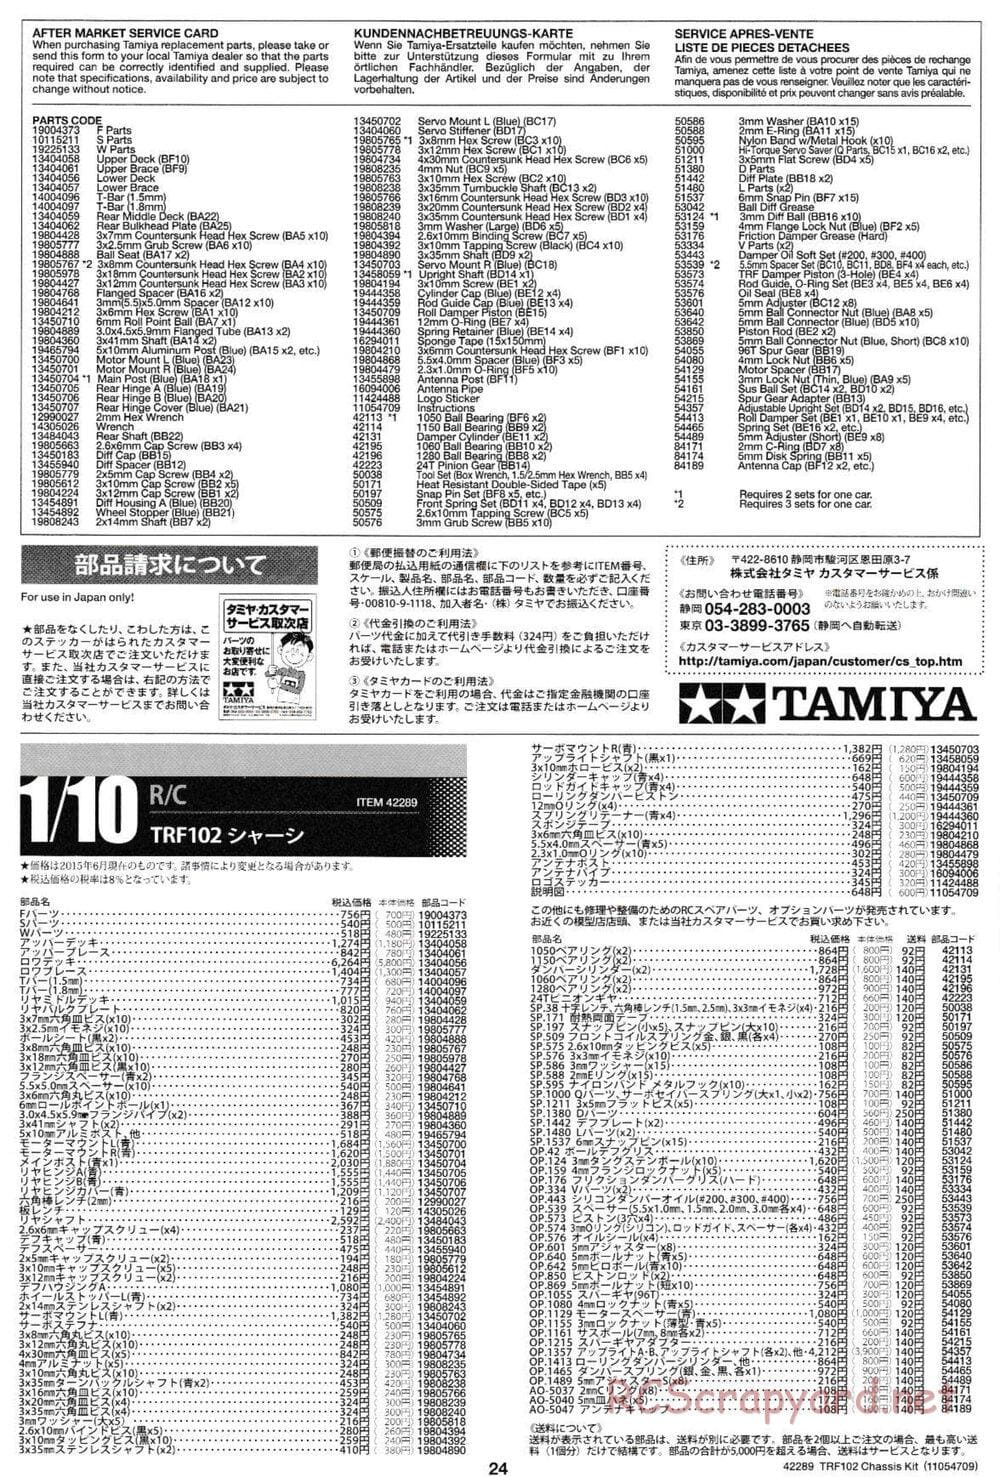 Tamiya - TRF102 Chassis - Manual - Page 24